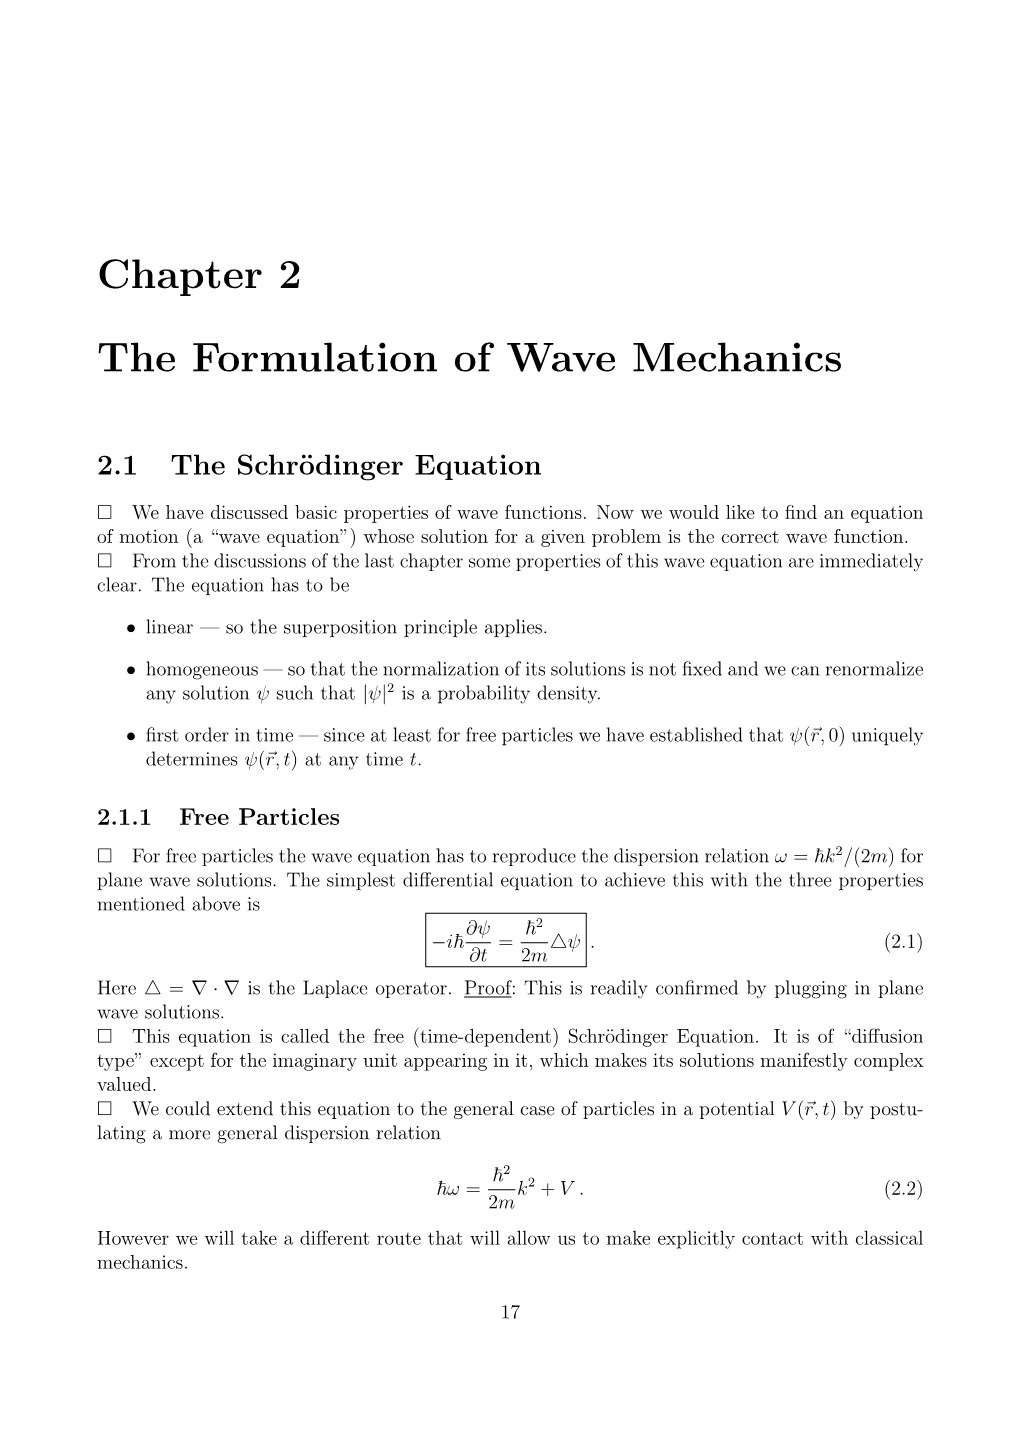 Chapter 2 the Formulation of Wave Mechanics